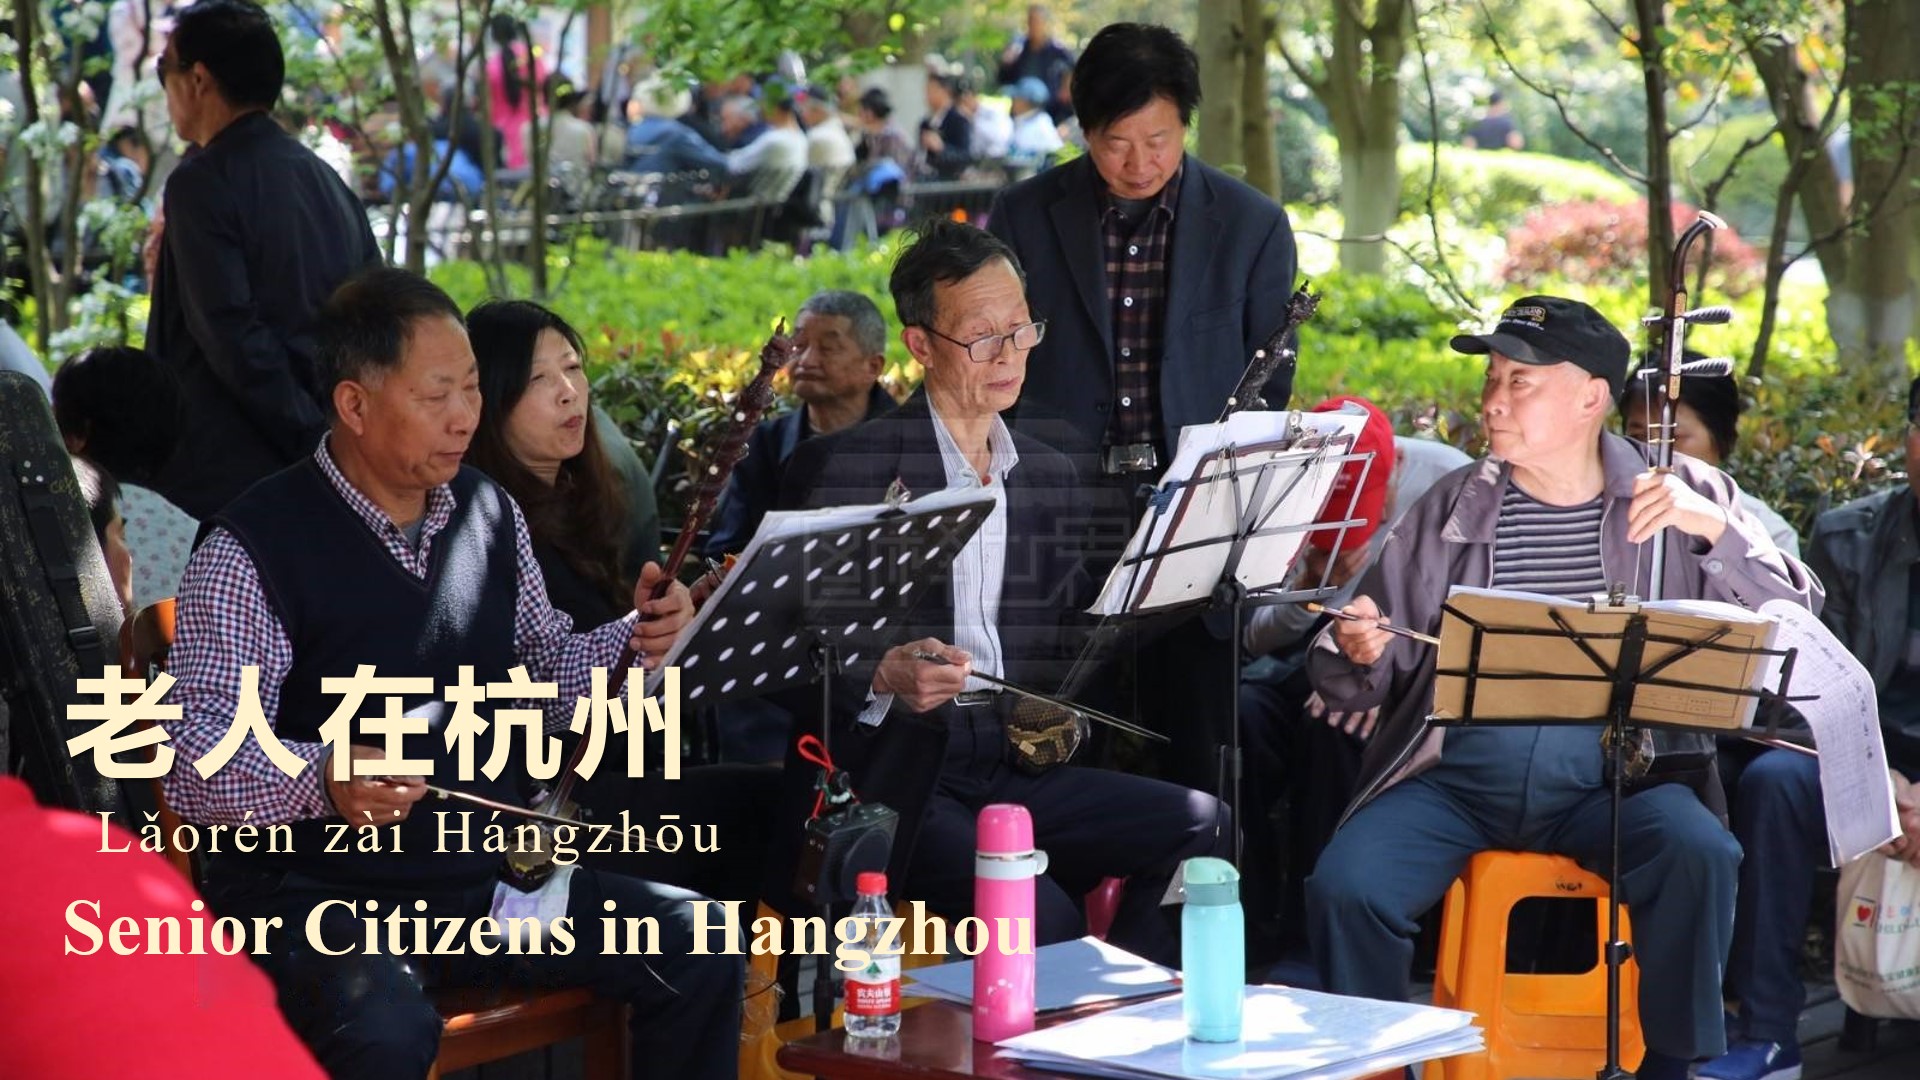 Senior Citizens in Hangzhou